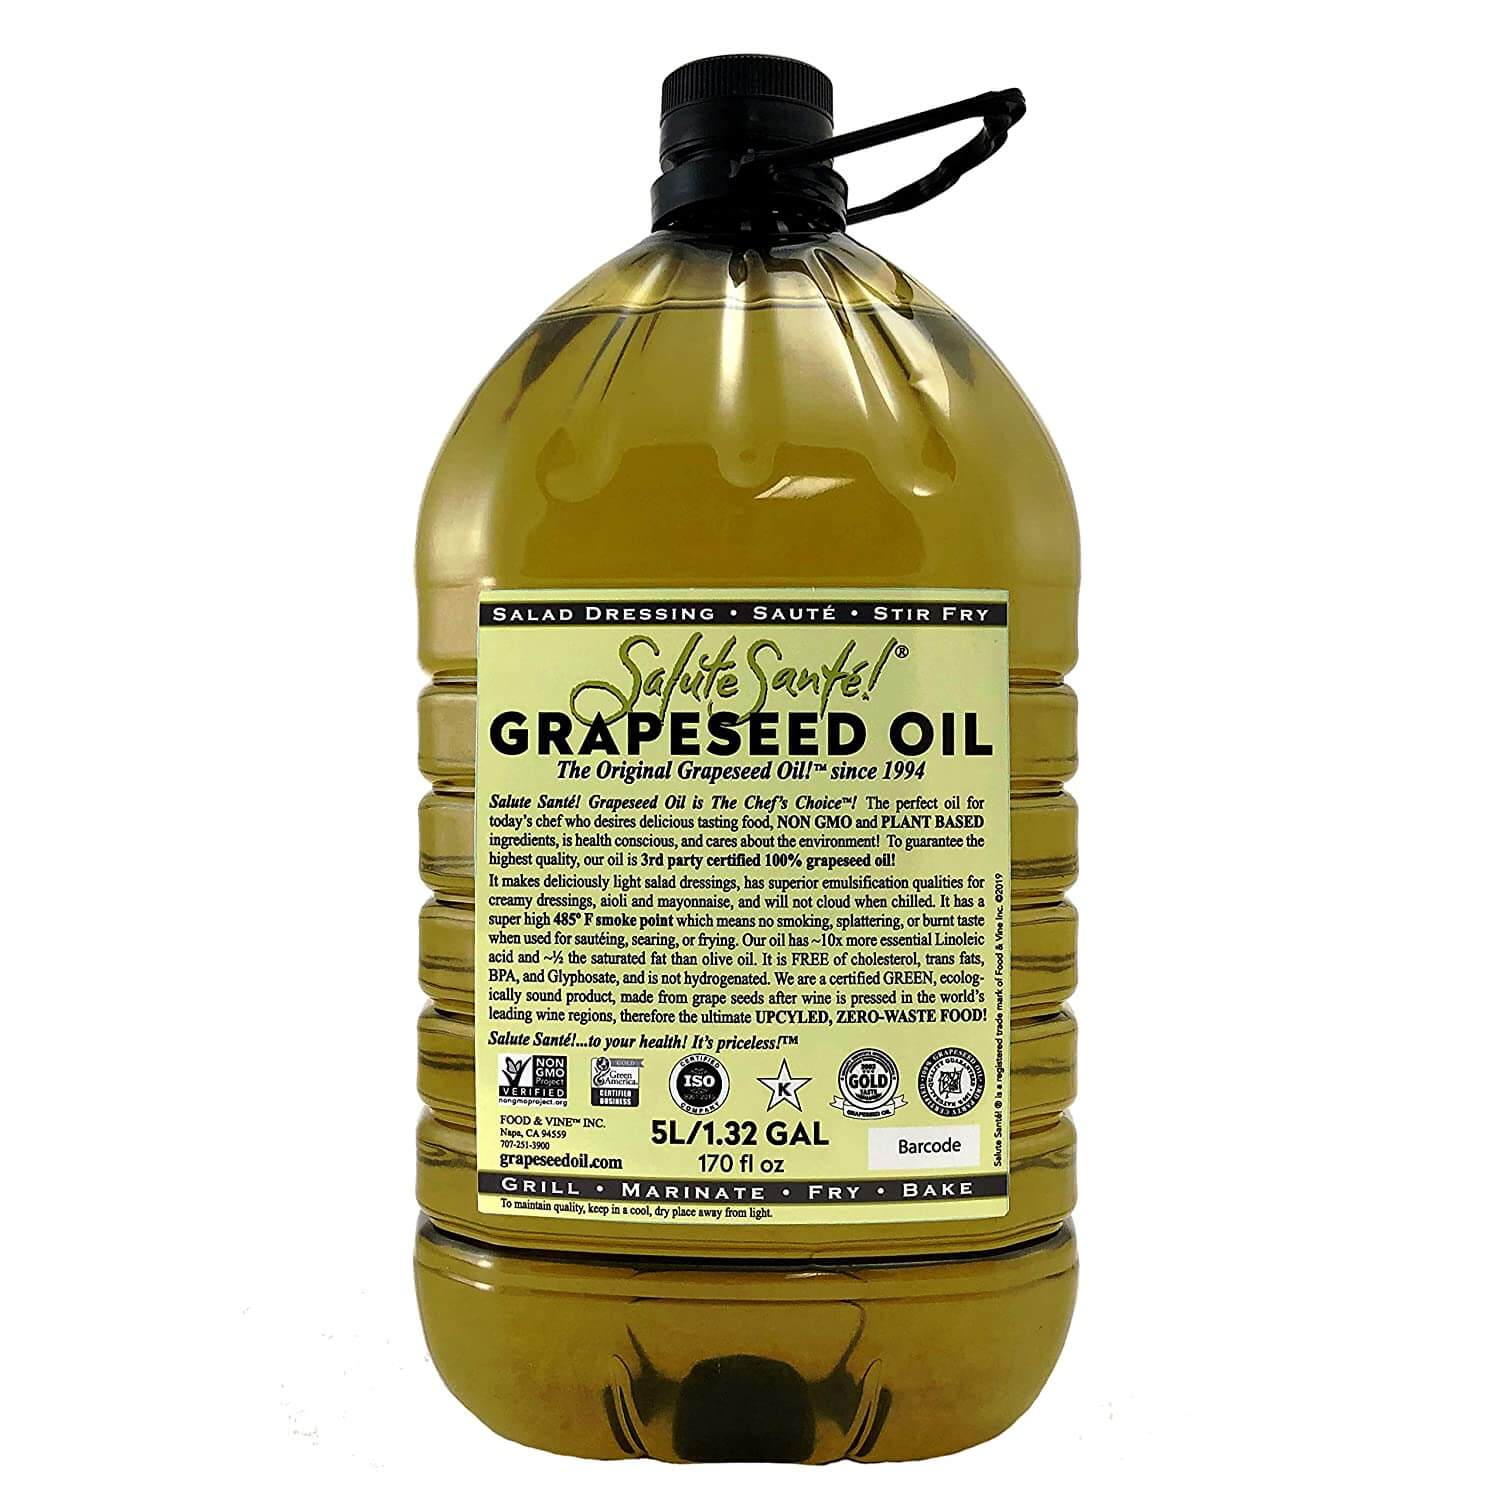 Salute Sante Grapeseed Oil